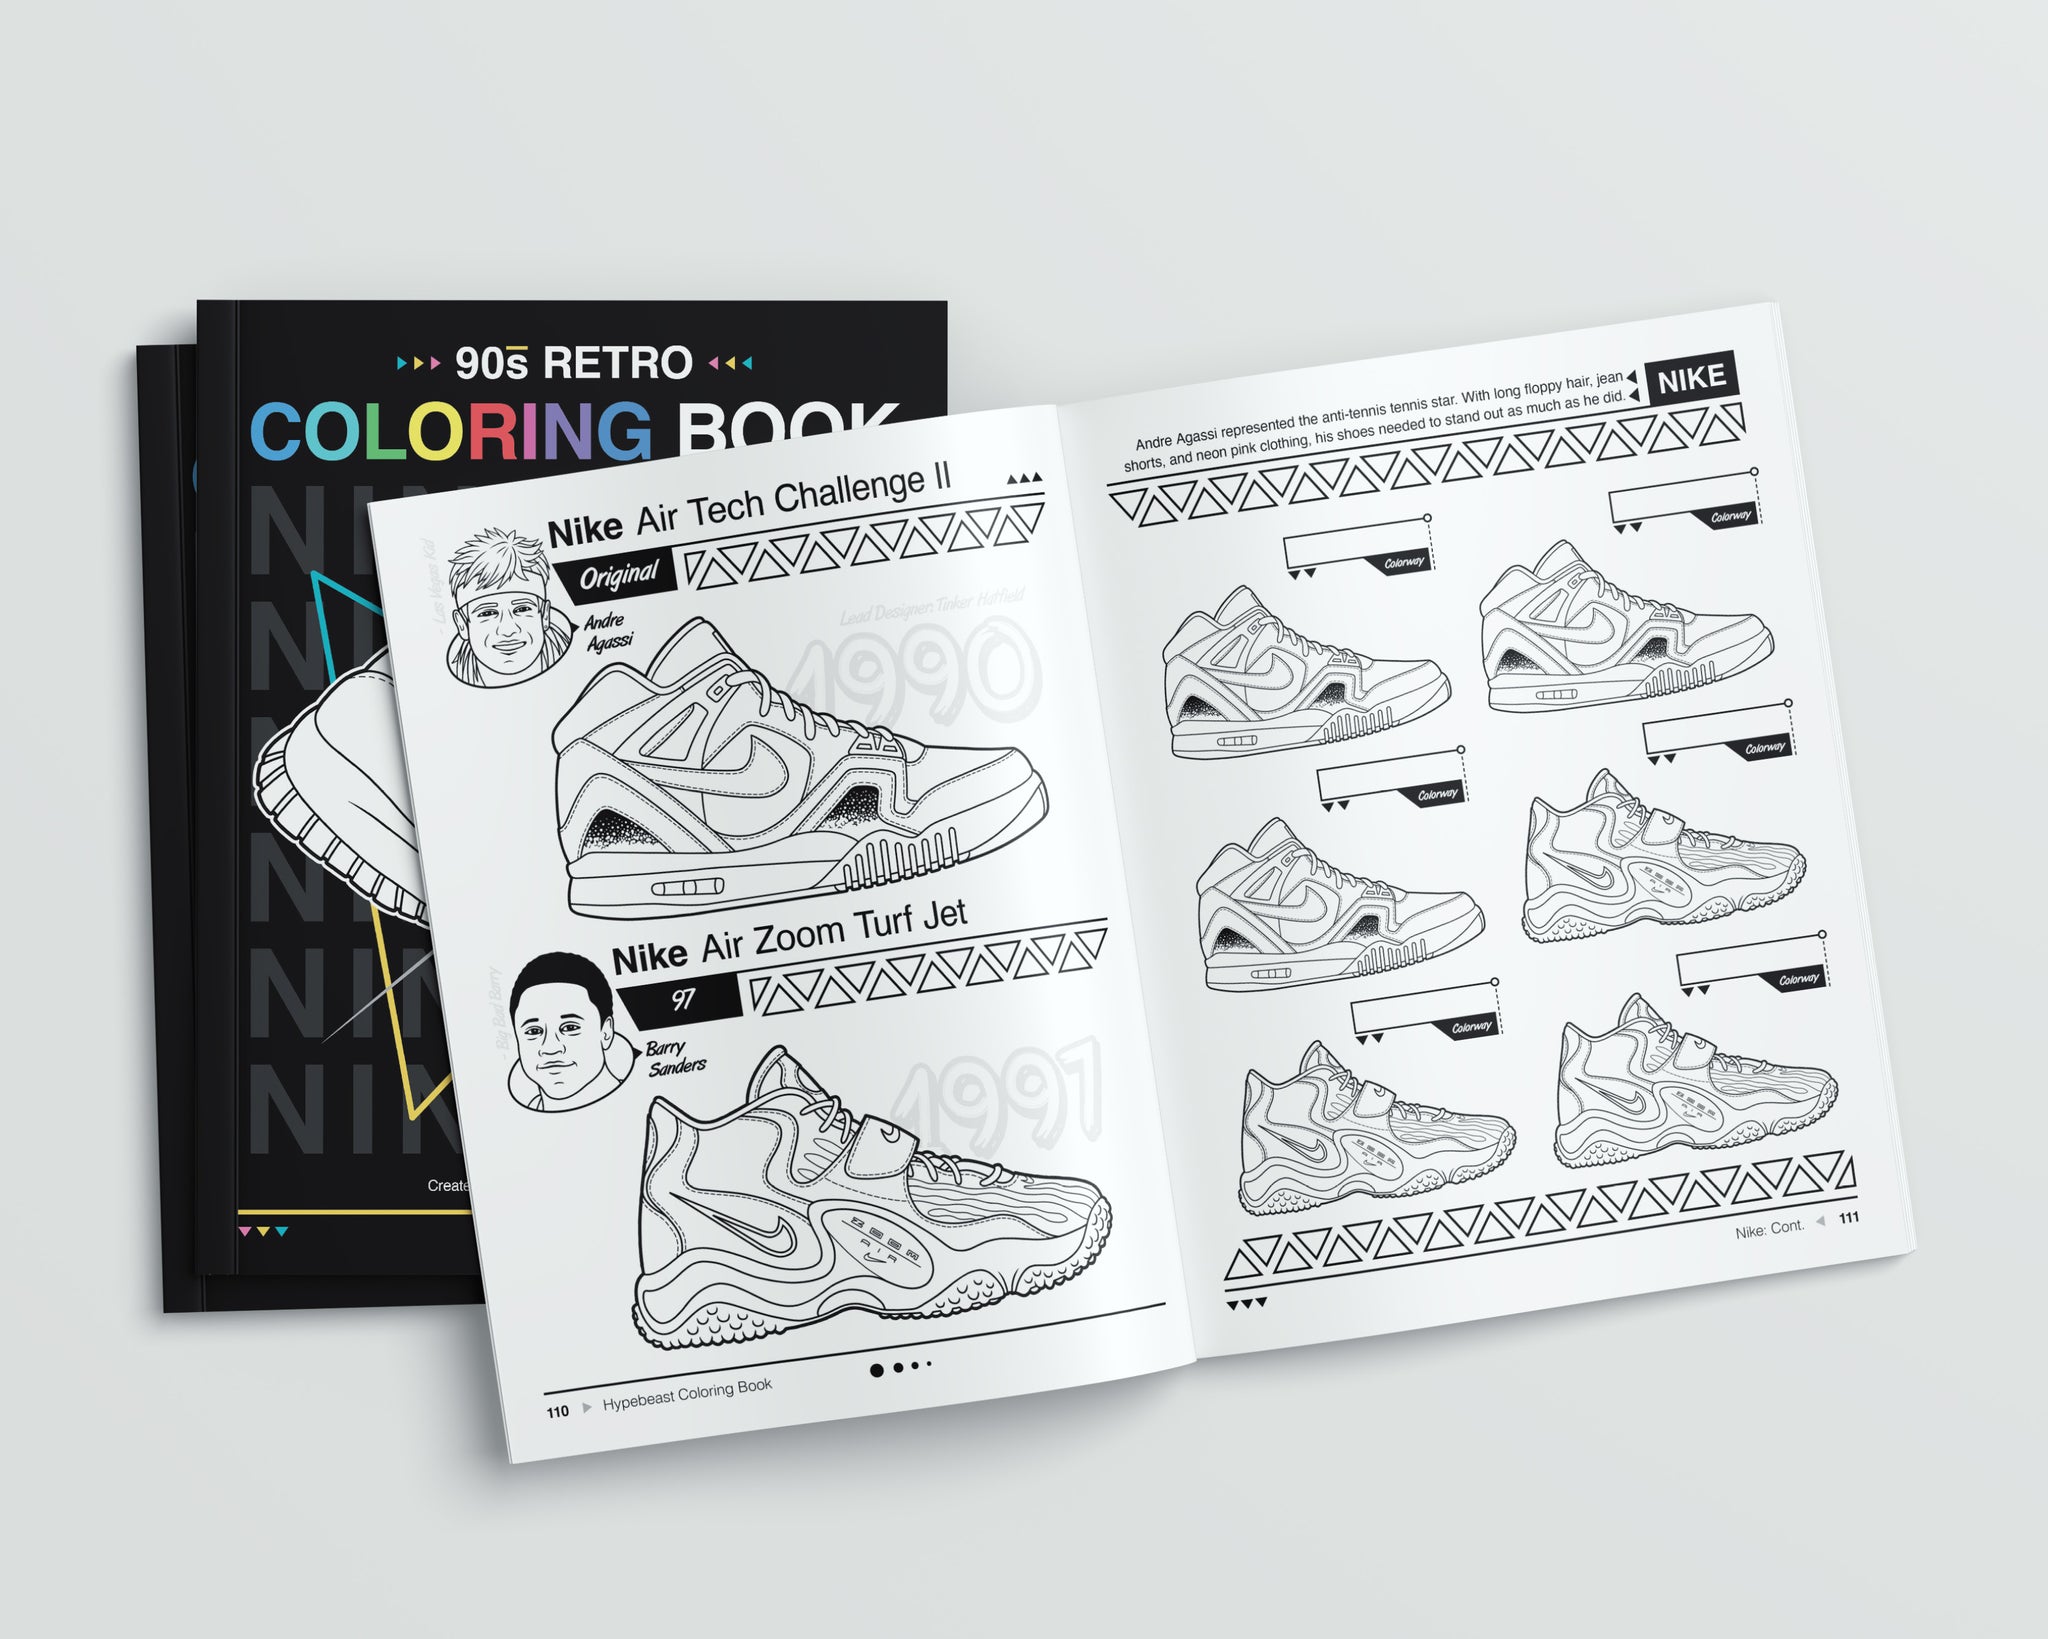 S retro sneaker coloring book â created by kicksart â kicksart shop